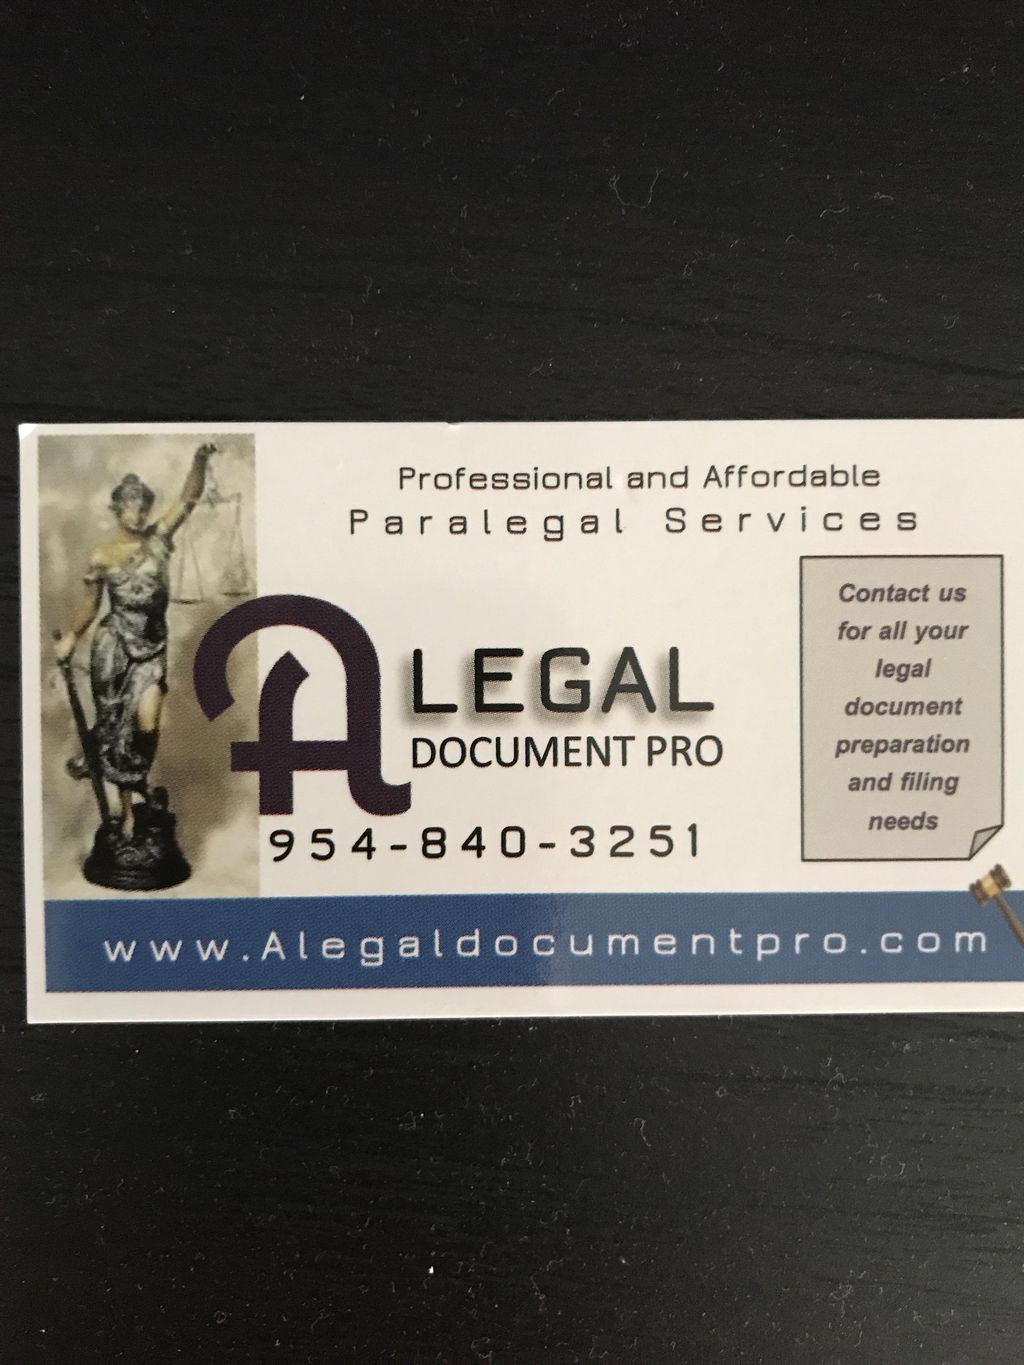 A Legal Document Pro